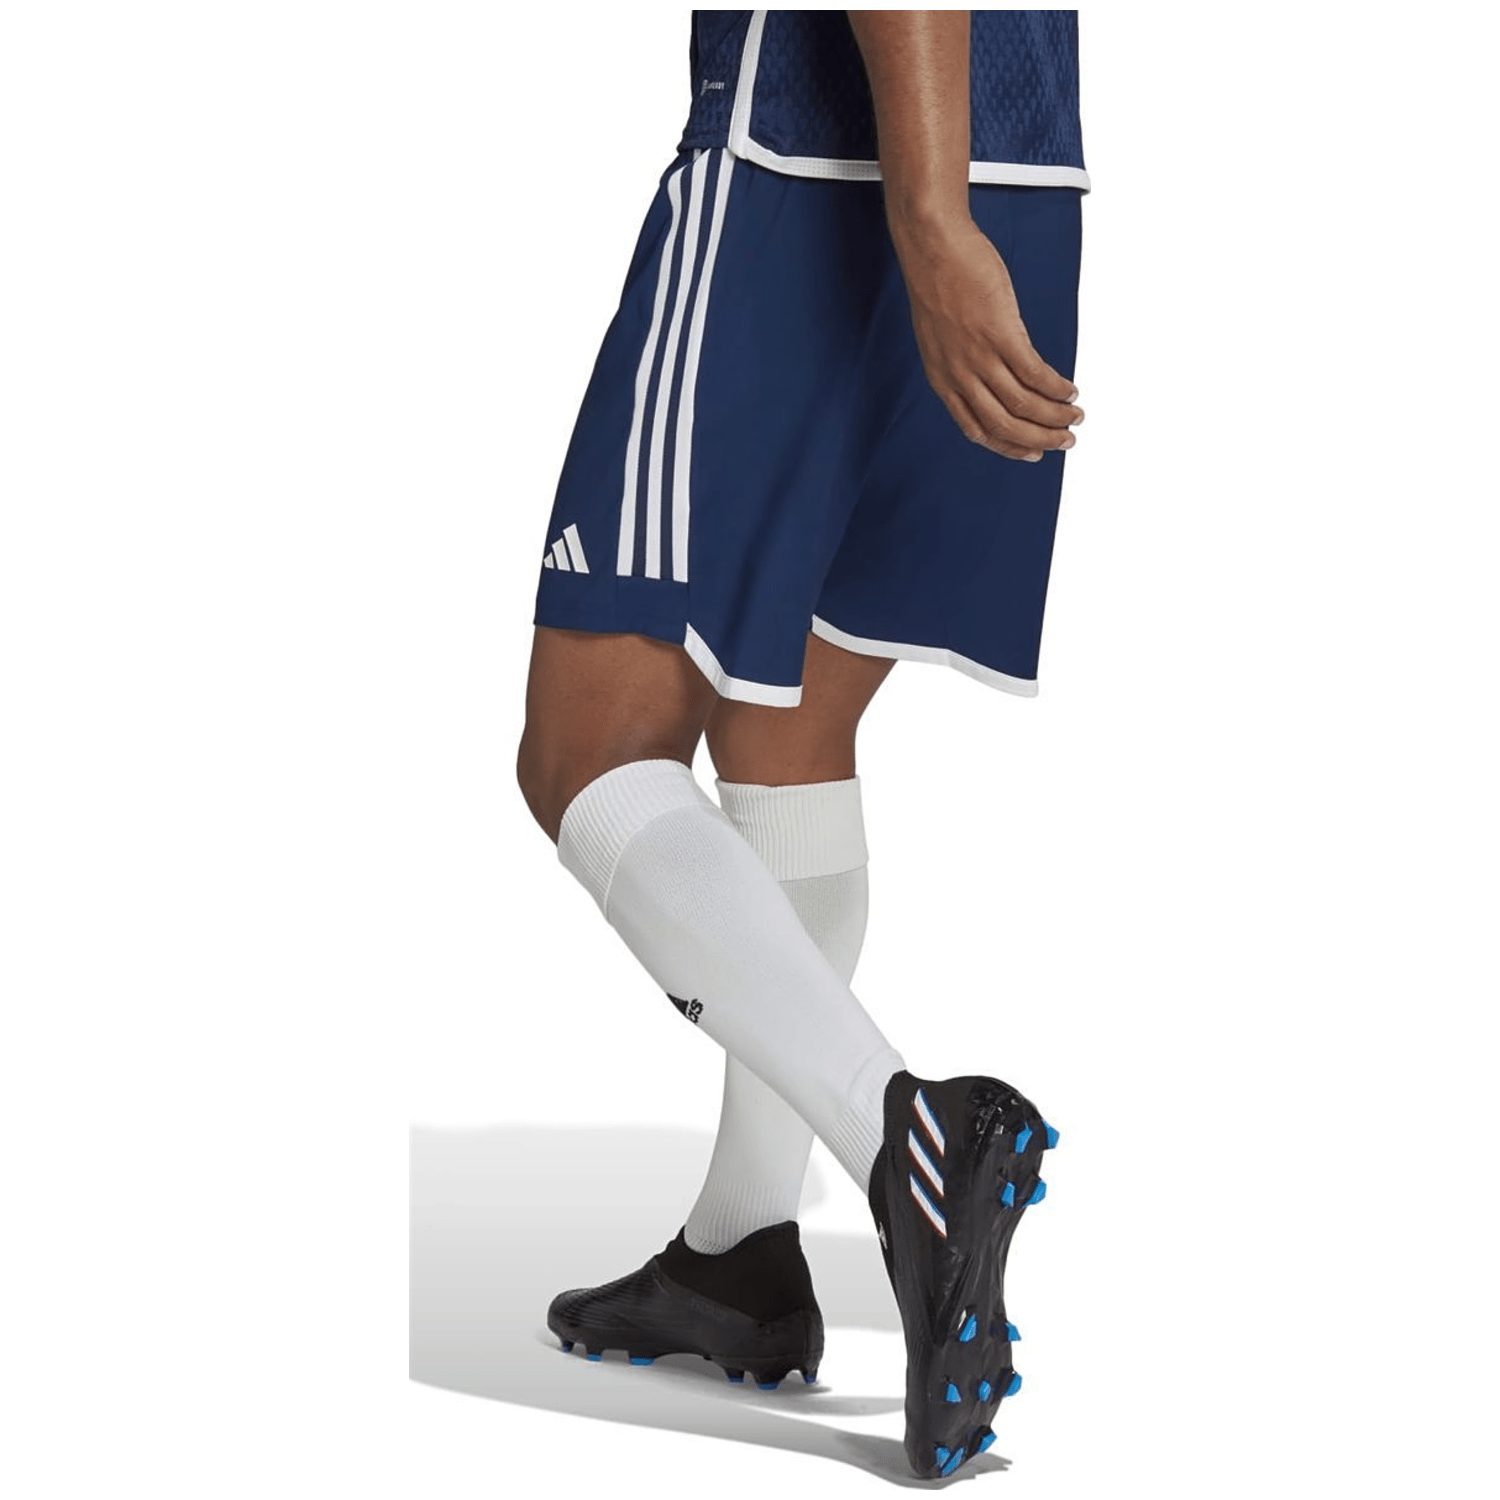 Adidas Tiro 23 Competition Match Shorts Herren